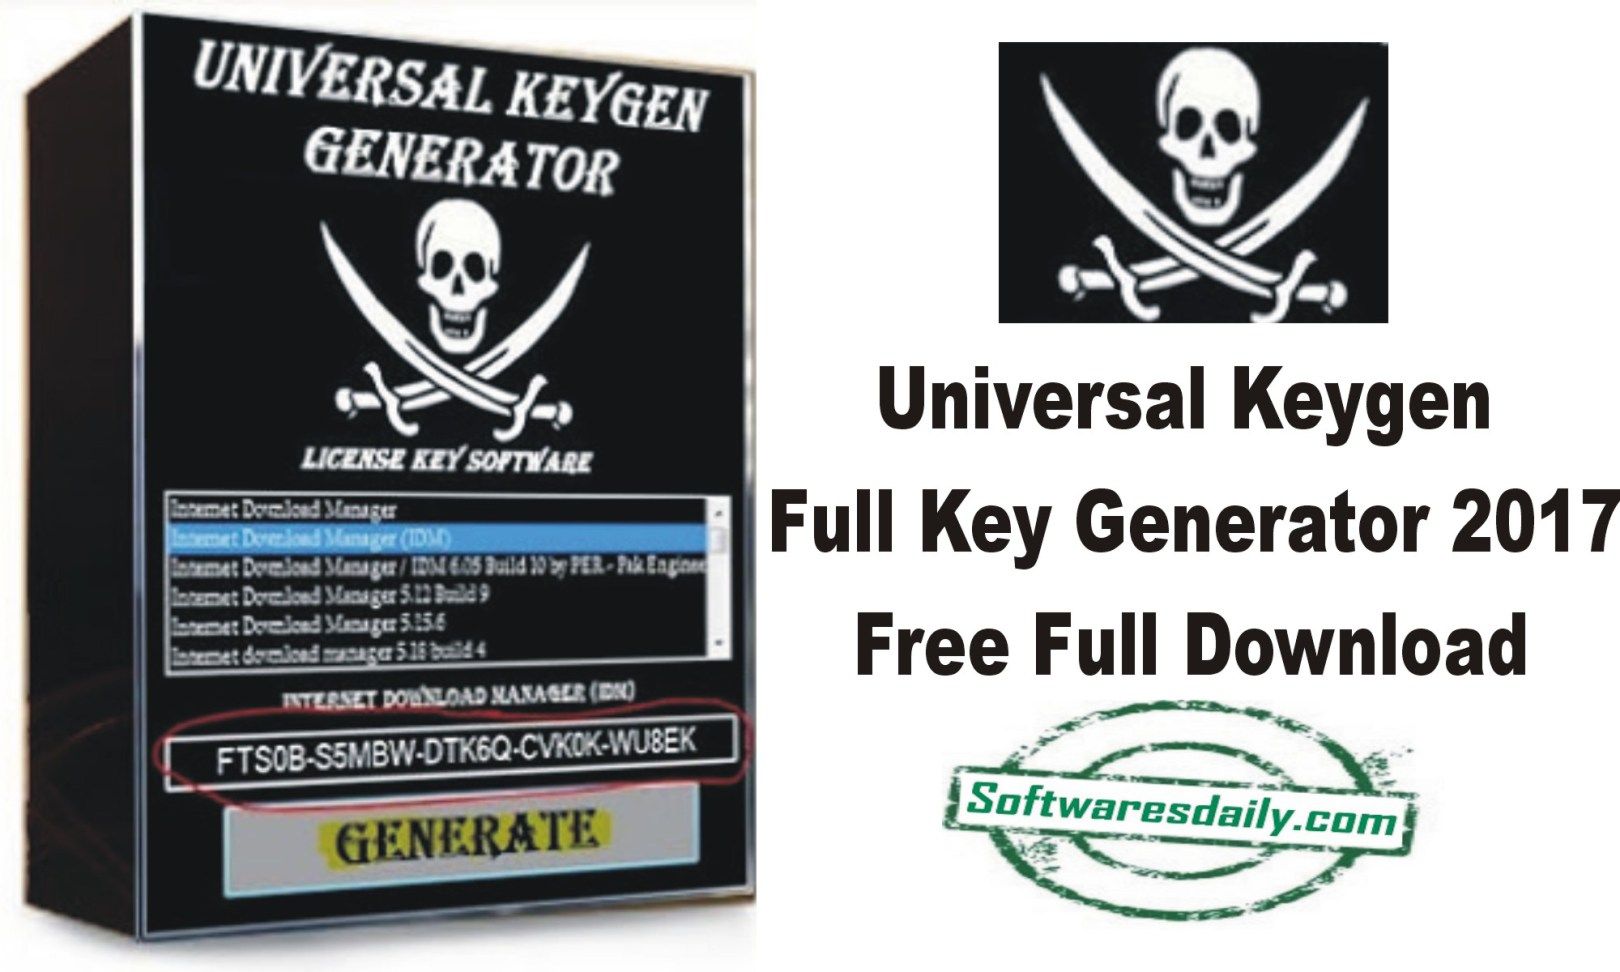 Keygen code generator download free for mac